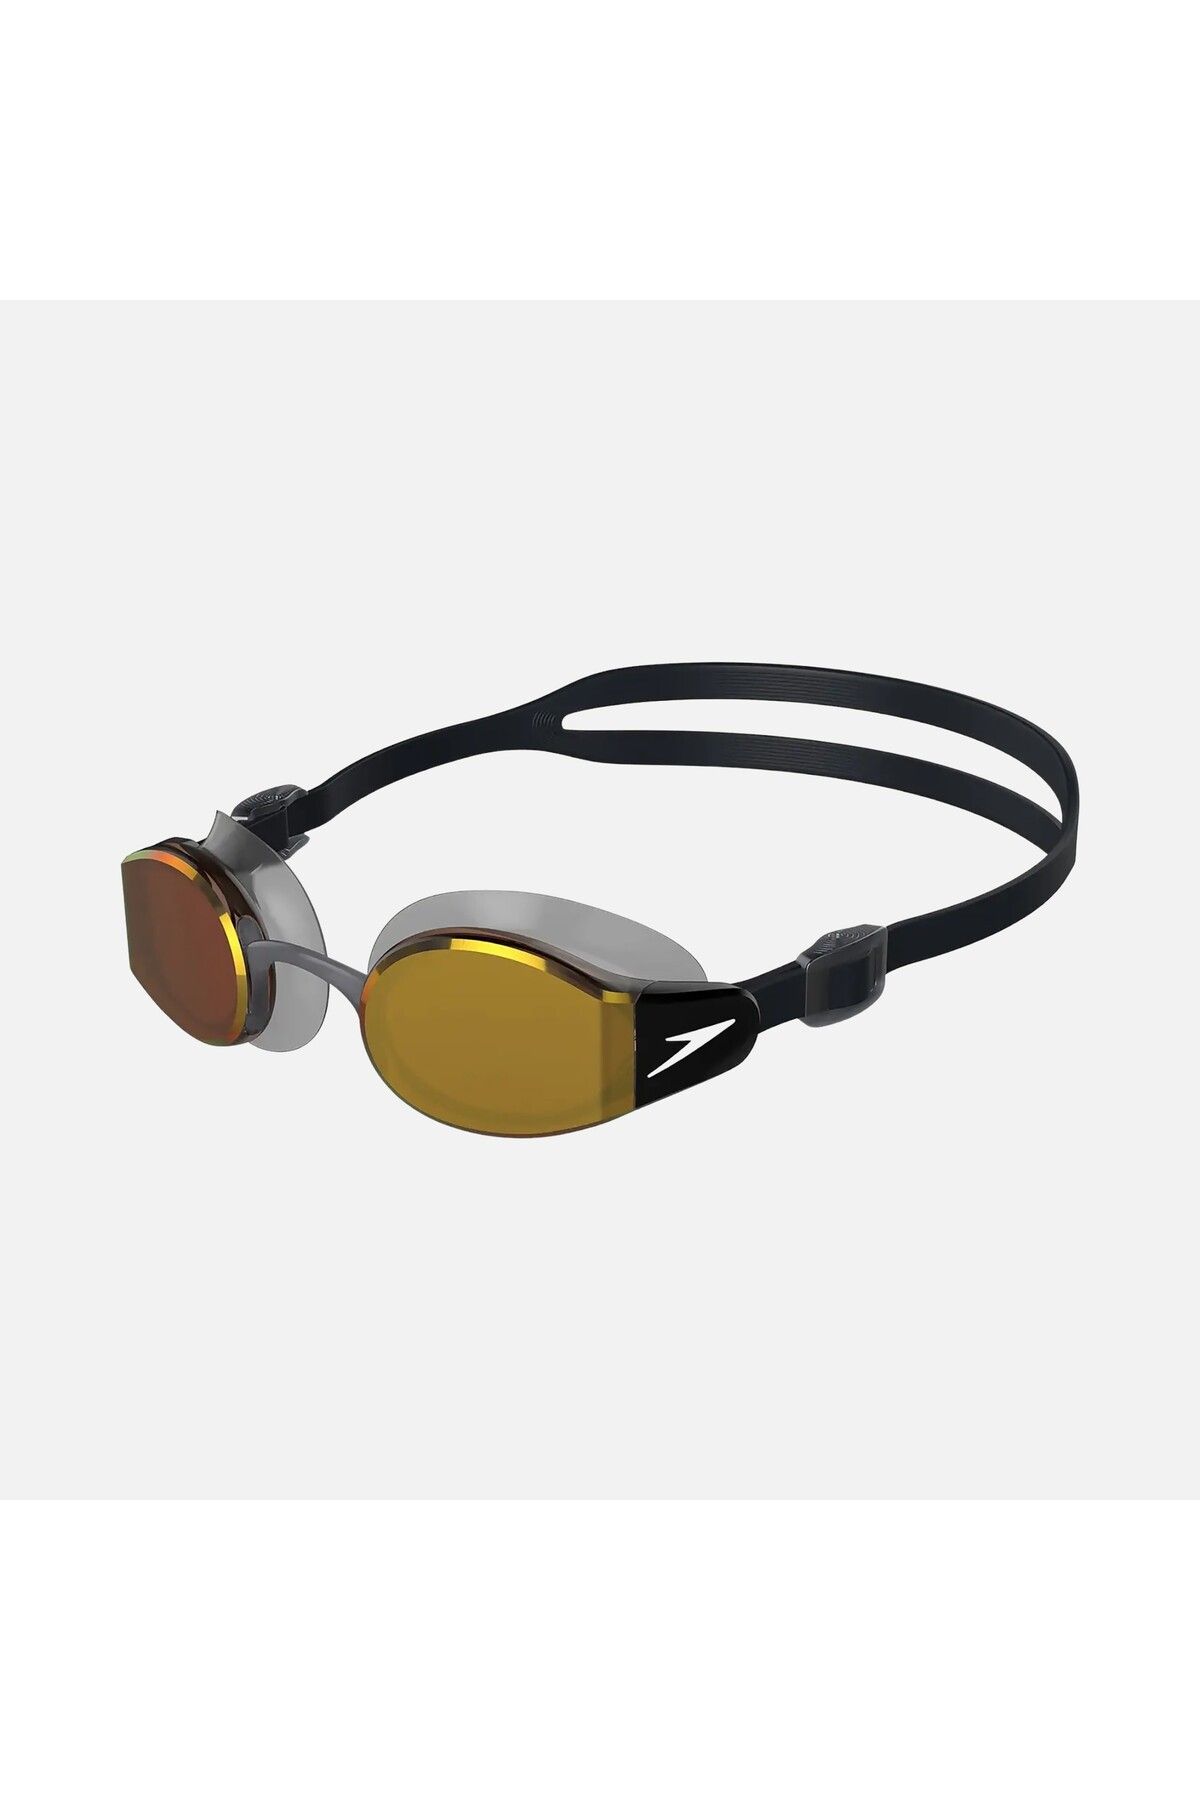 SPEEDO Mariner Pro Mirrored Unisex Yüzücü Gözlüğü